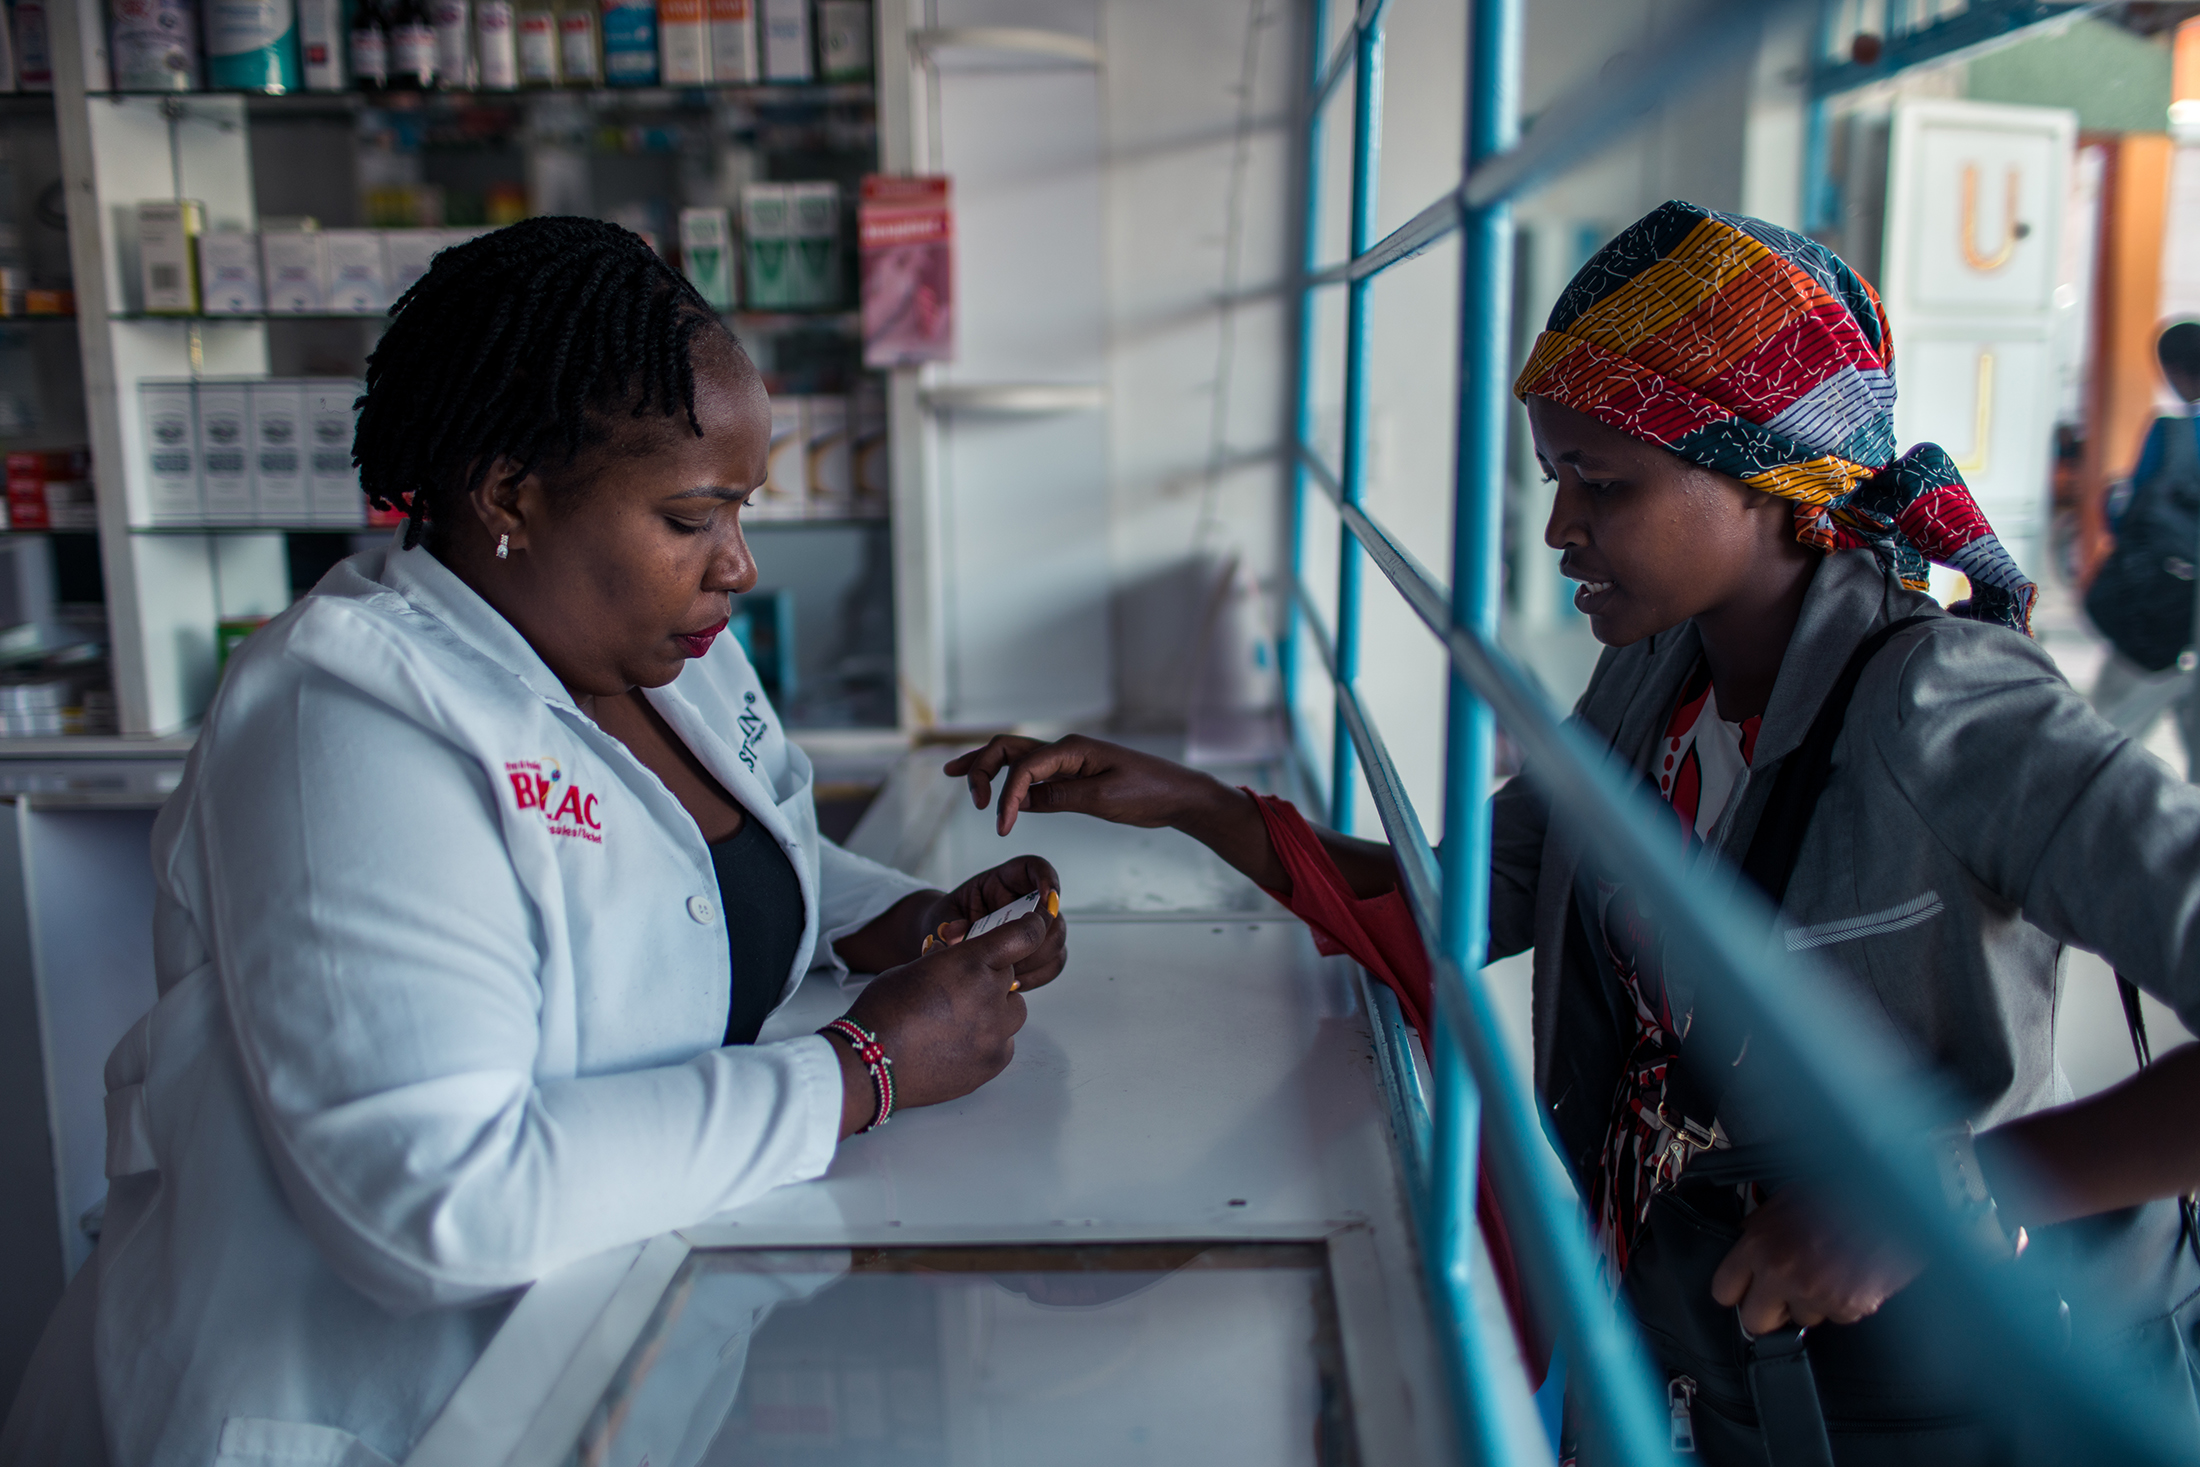 Serah assists a customer at her pharmacy in Nairobi, Kenya